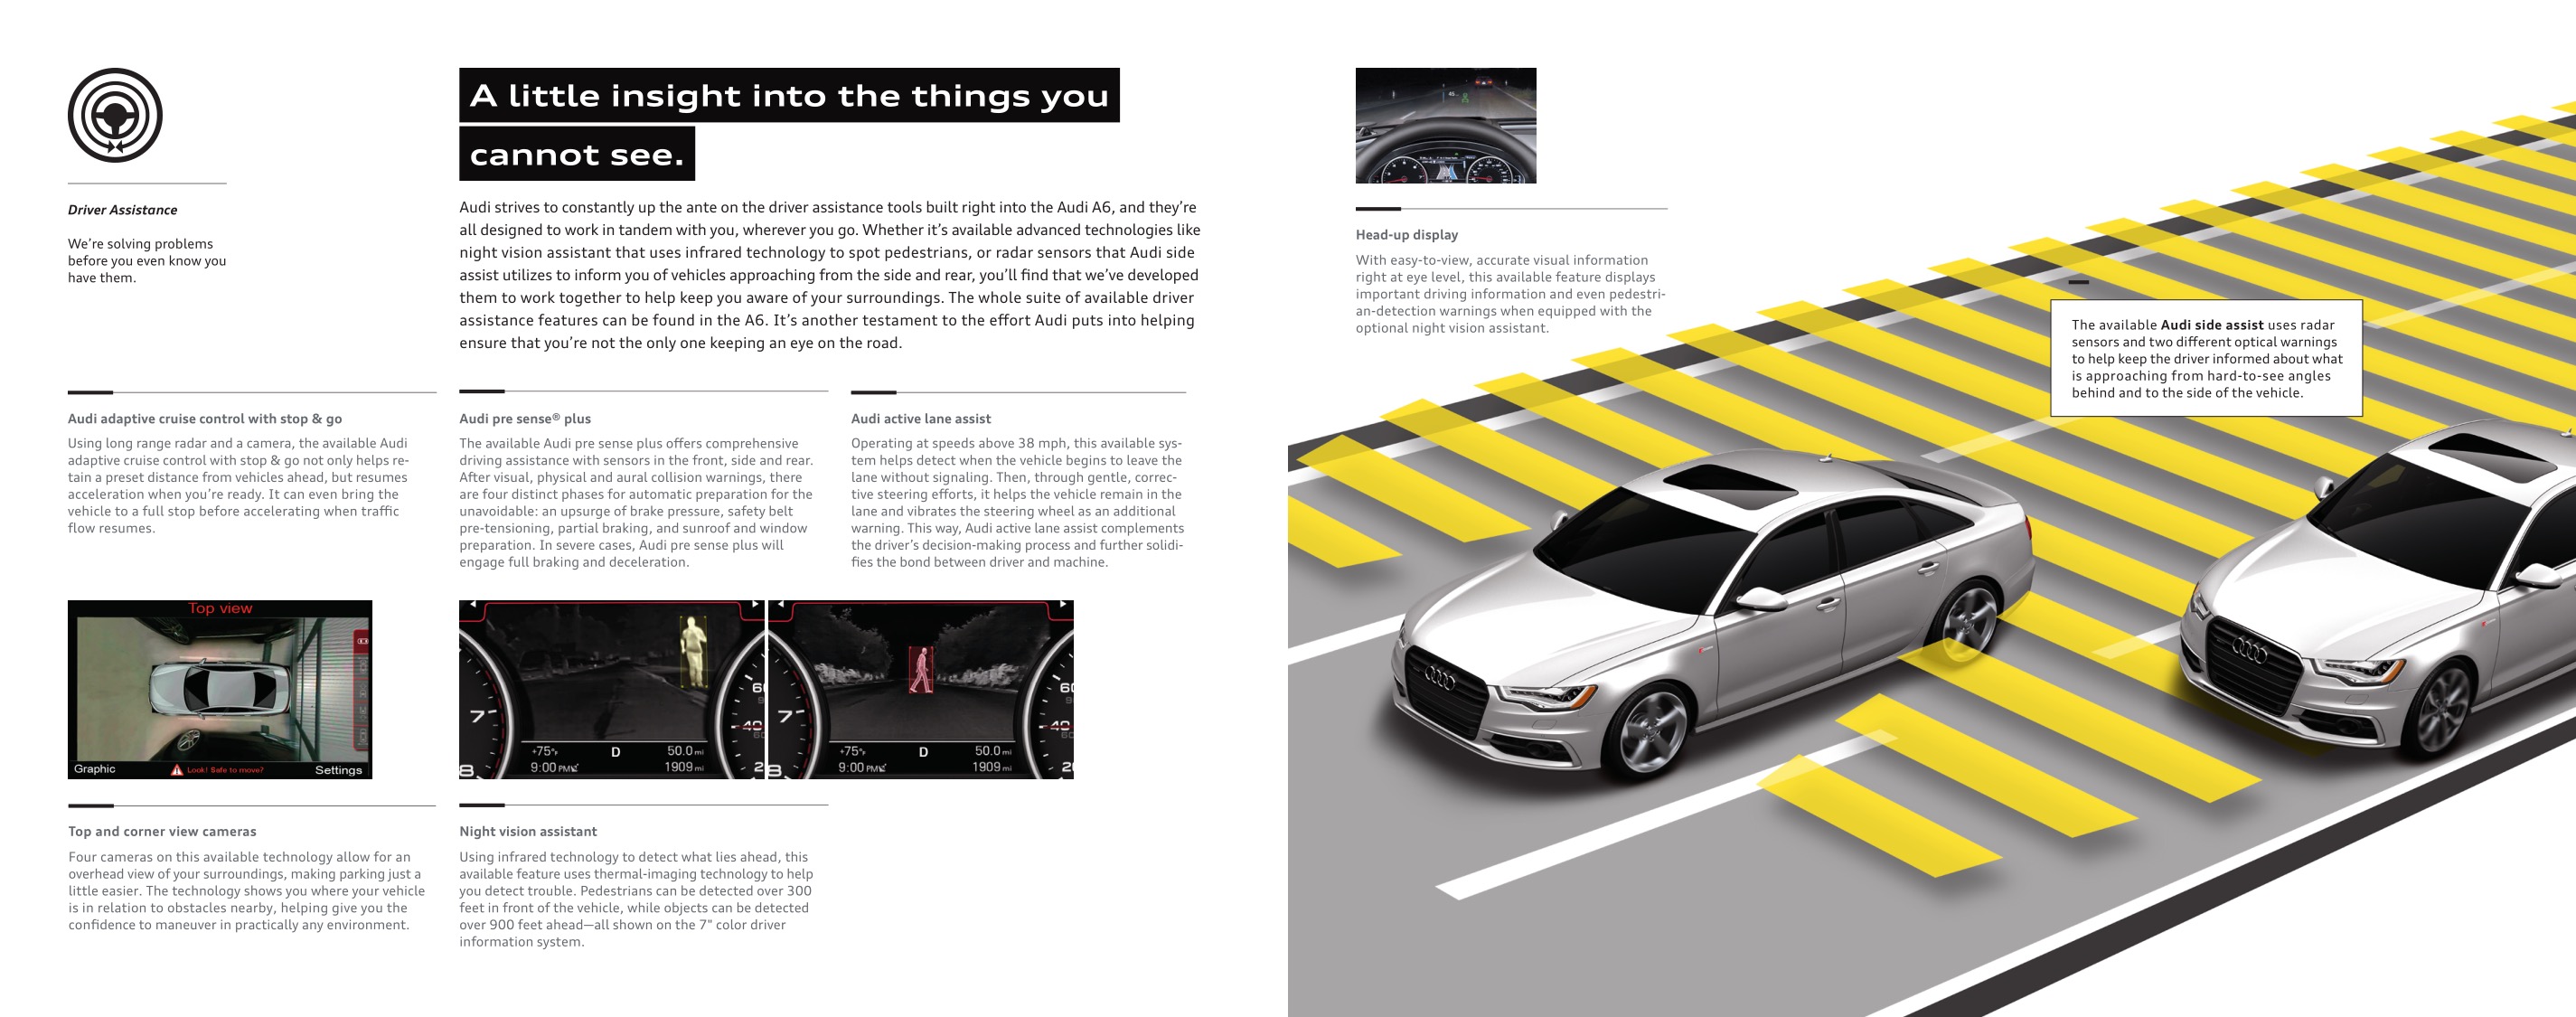 2015 Audi A6 Brochure Page 32